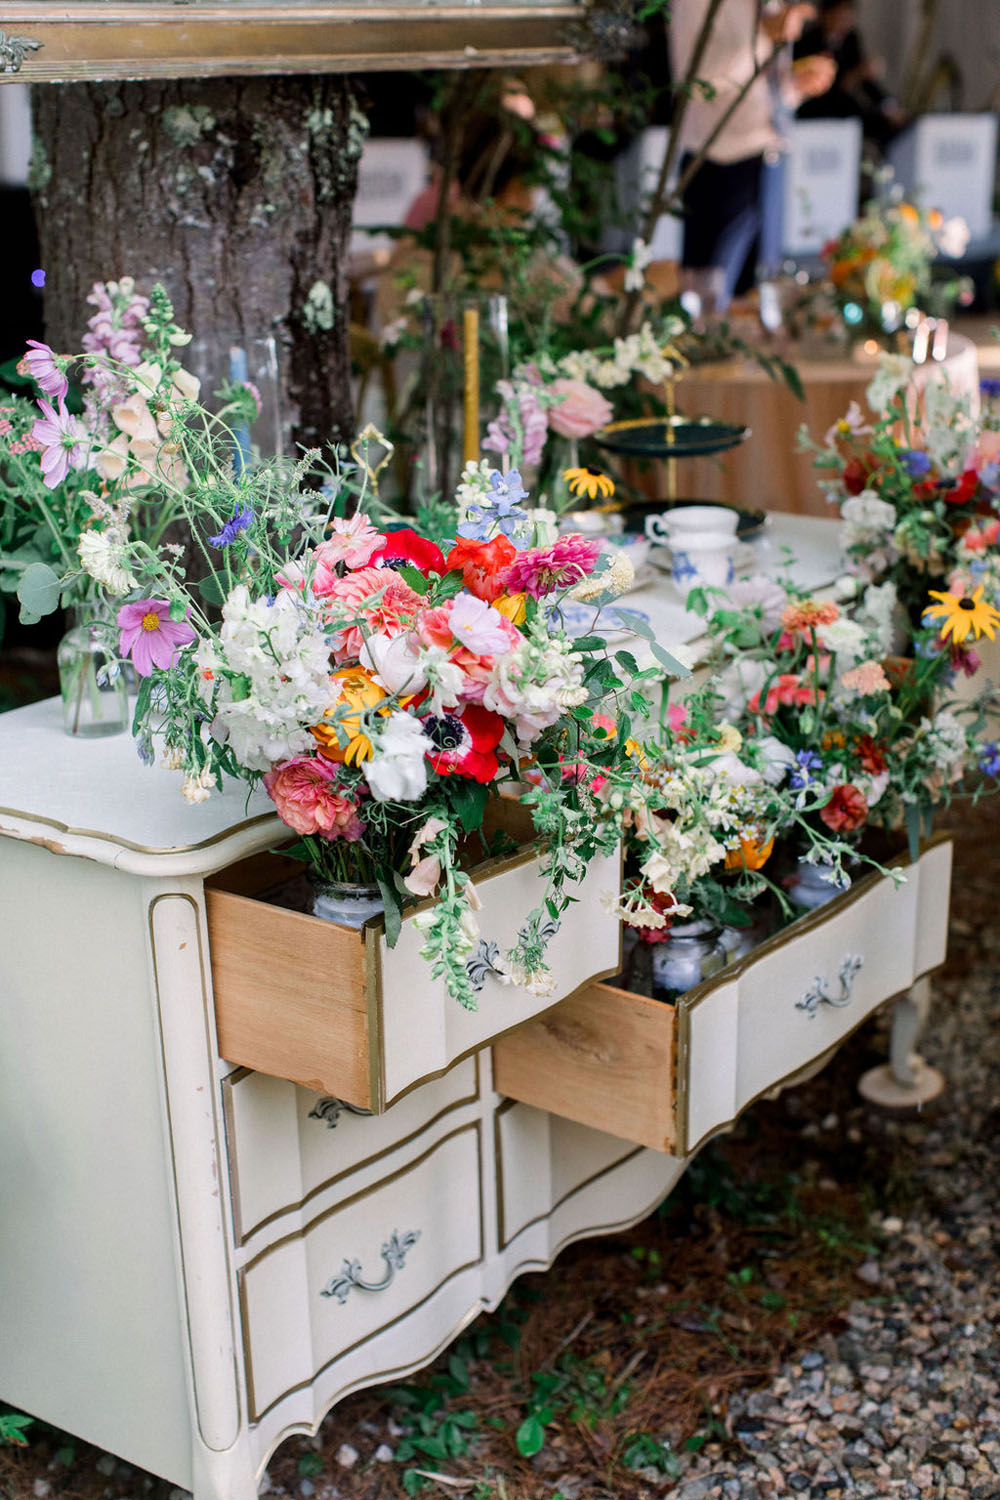 vintage dresser and flowers for wedding